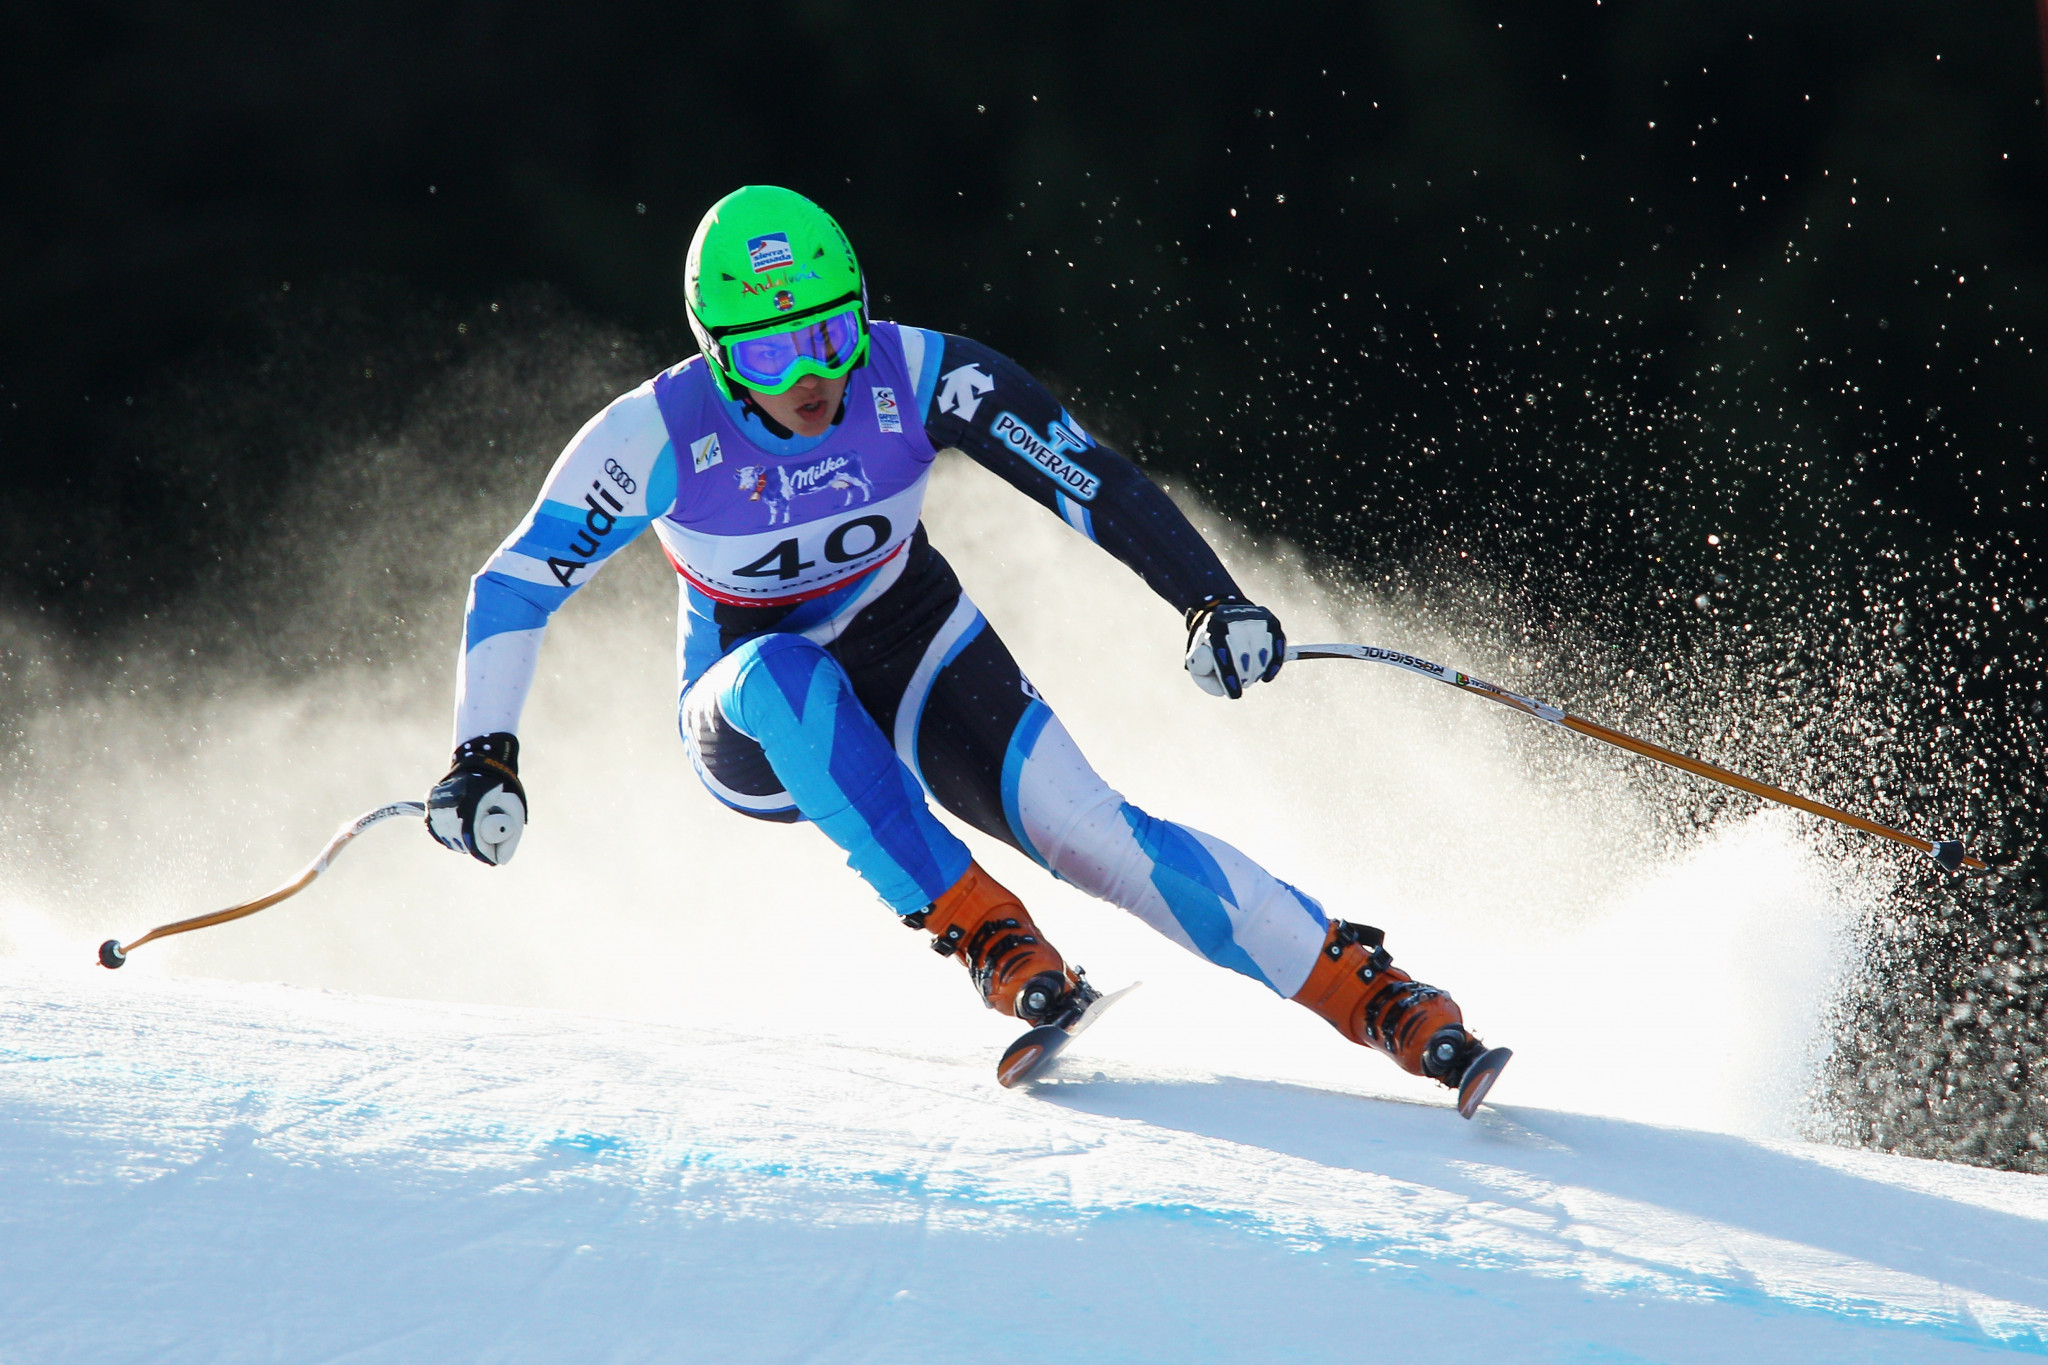 Five-time Olympian Rienda lands new role at Sierra Nevada ski resort